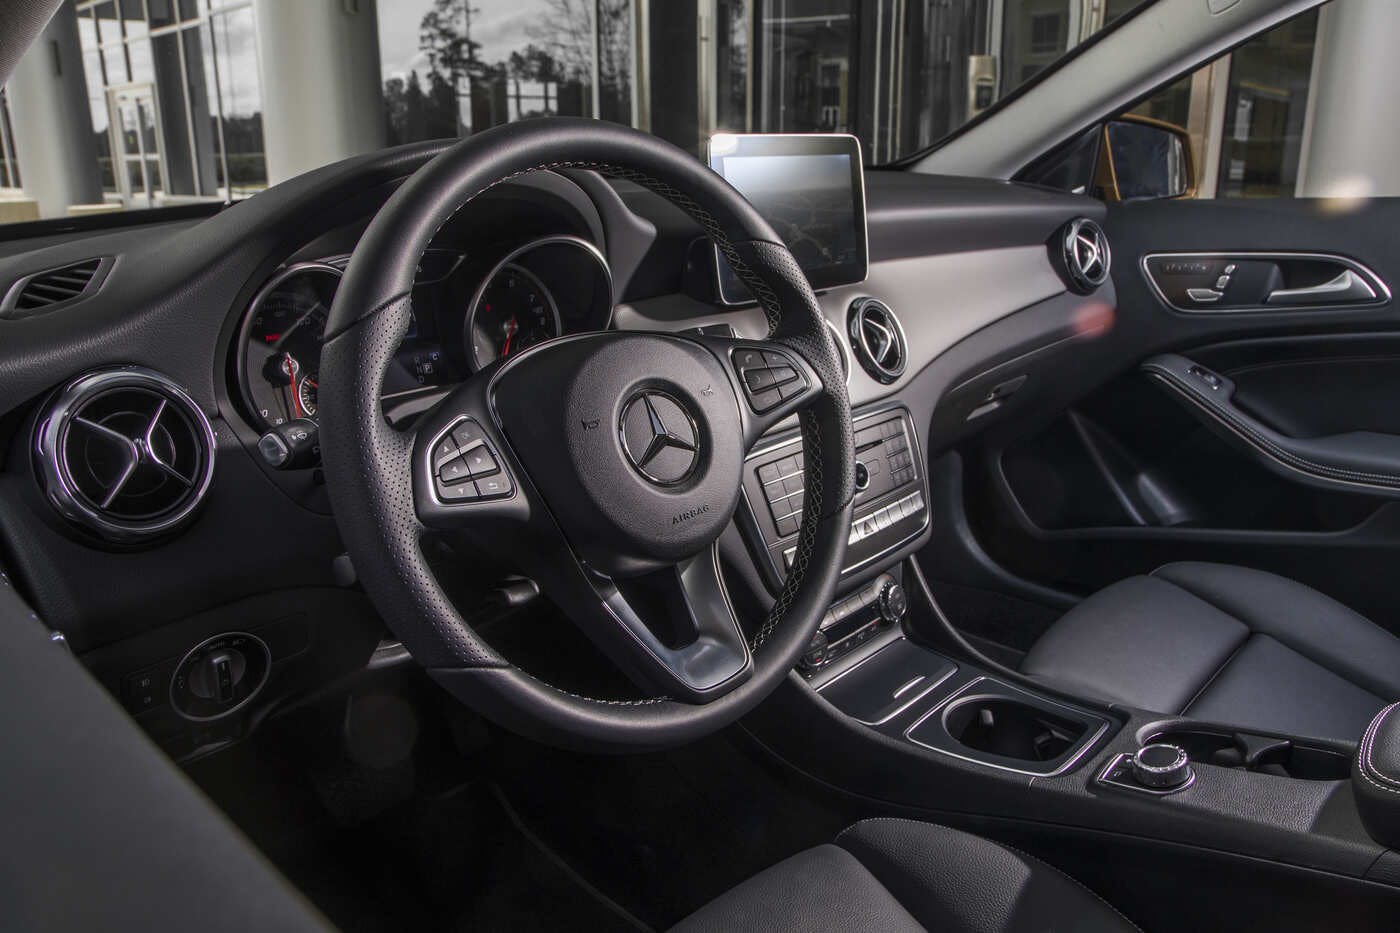 2020 Mercedes Benz Gla Comparisons Reviews Pictures Truecar